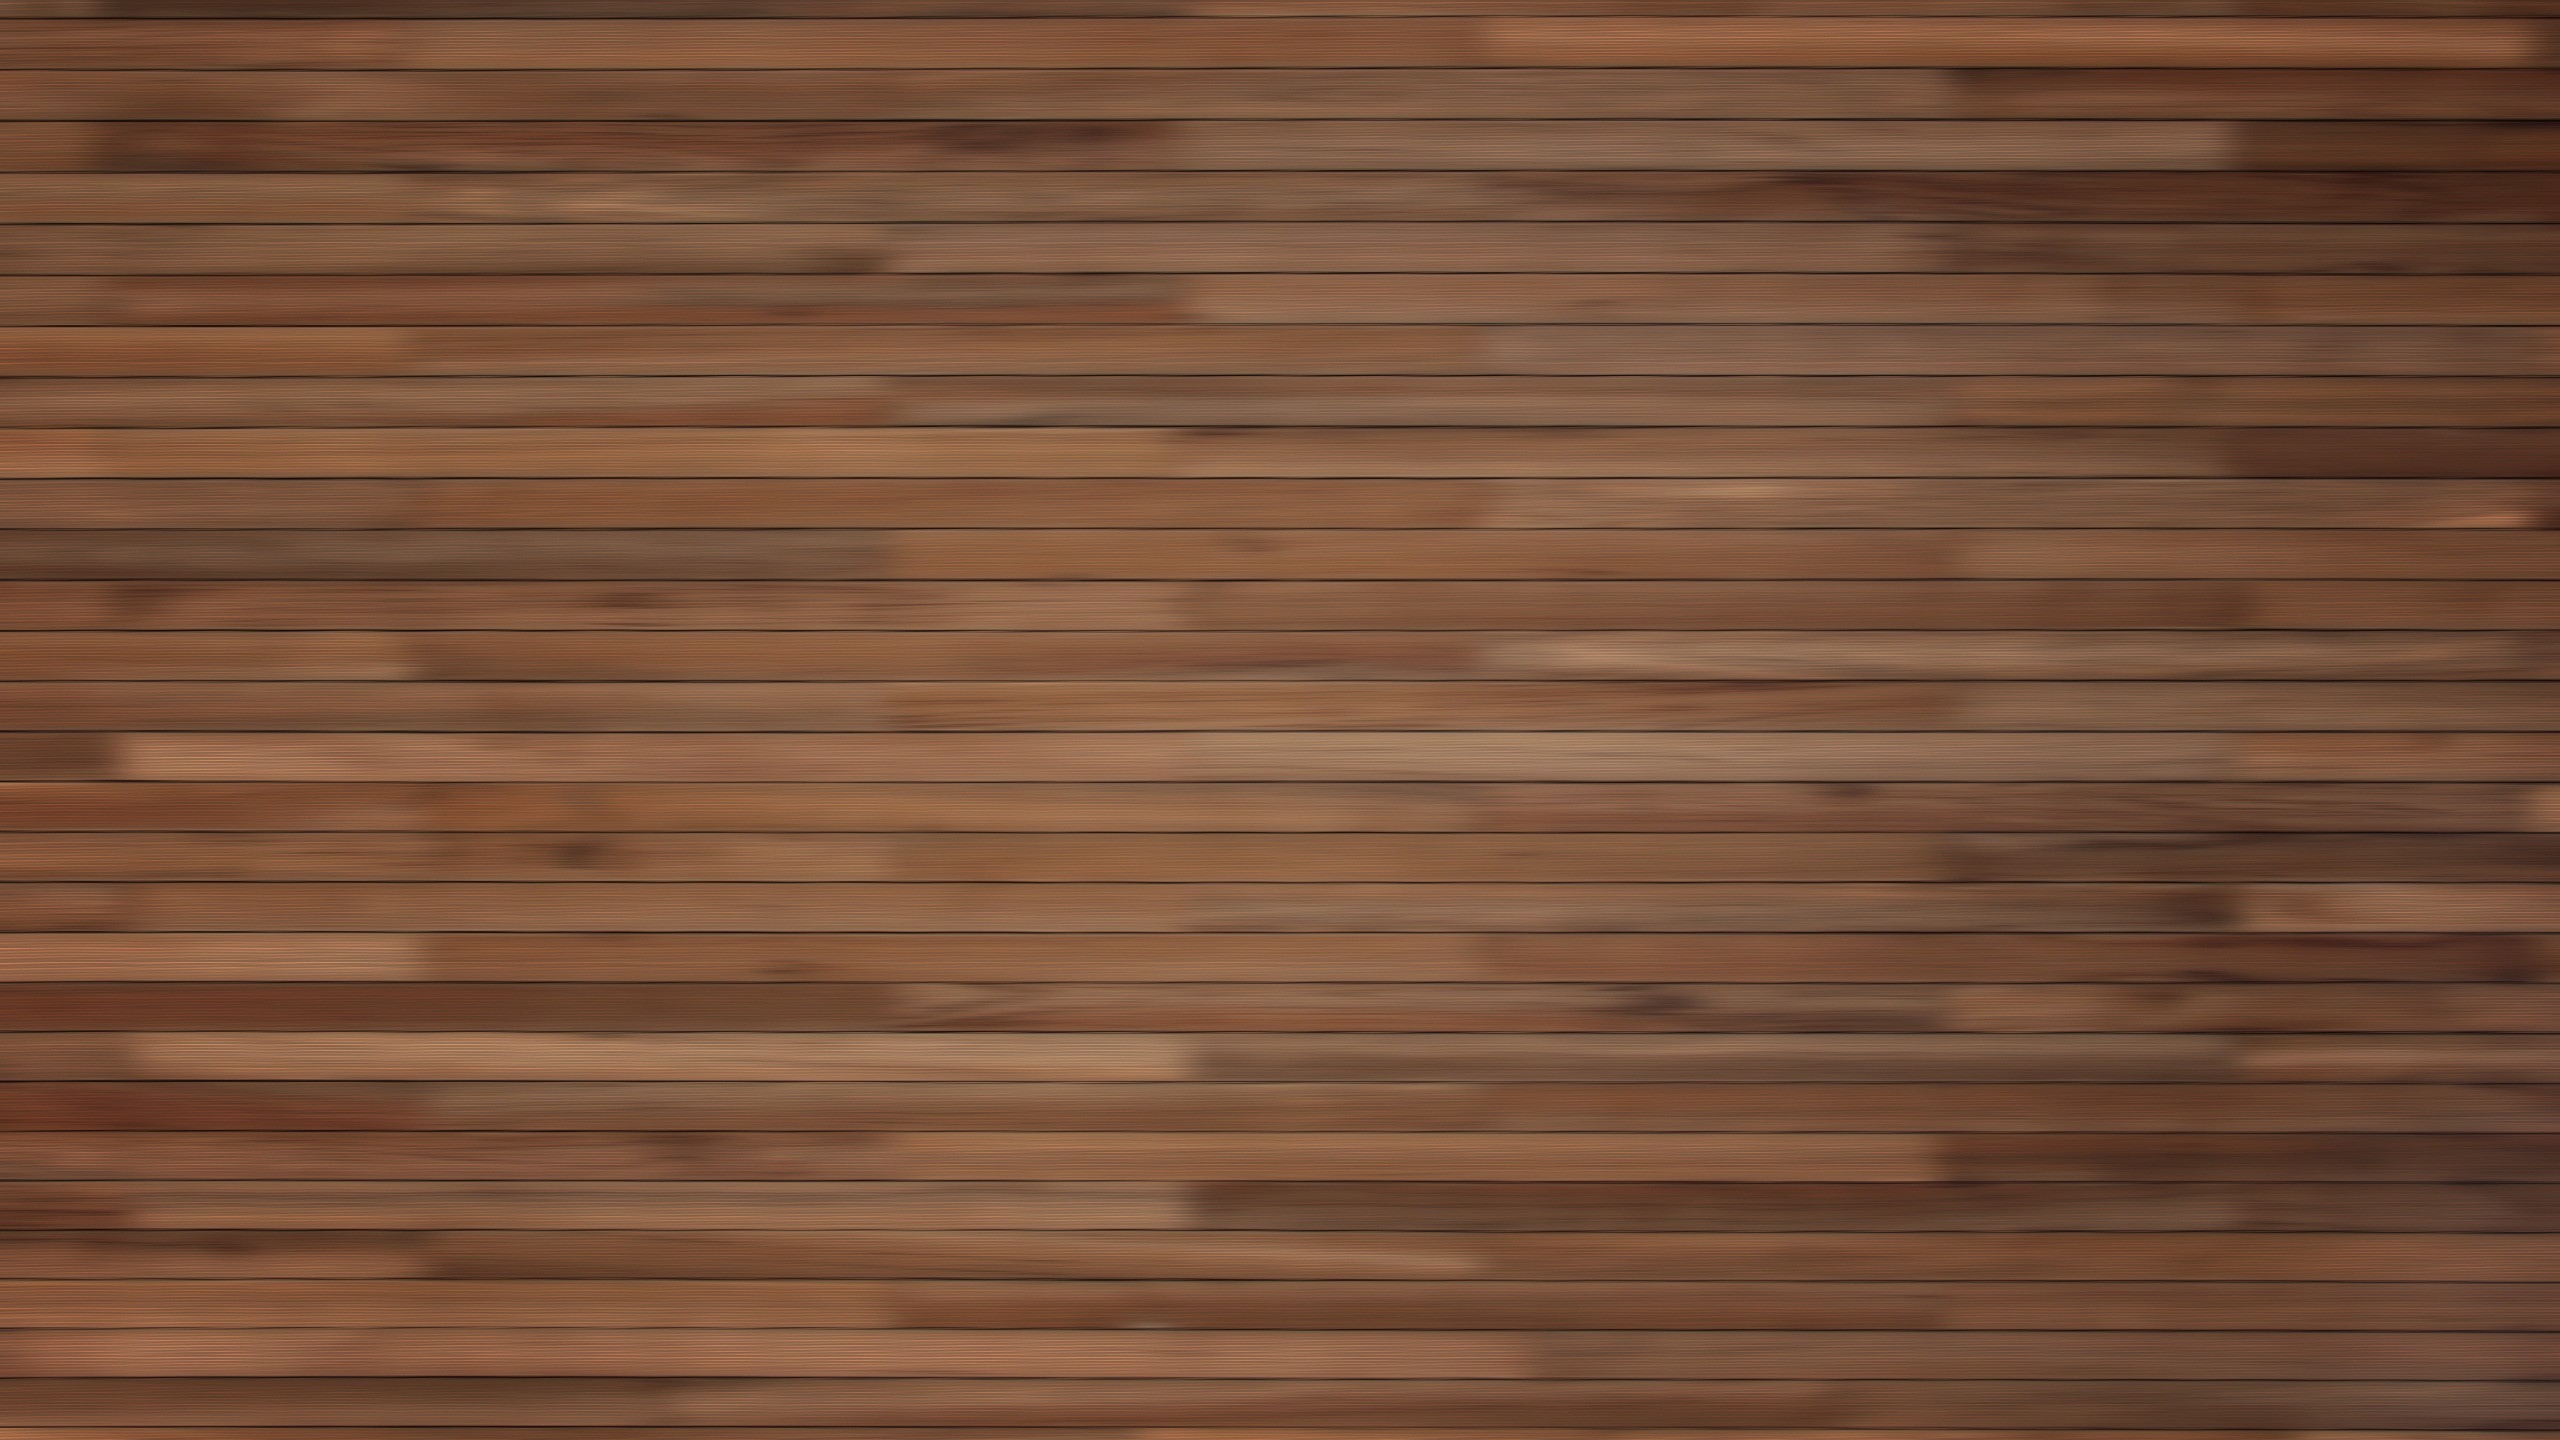 Wallpaper Wood Bright Stripes Vertical Mac Imac